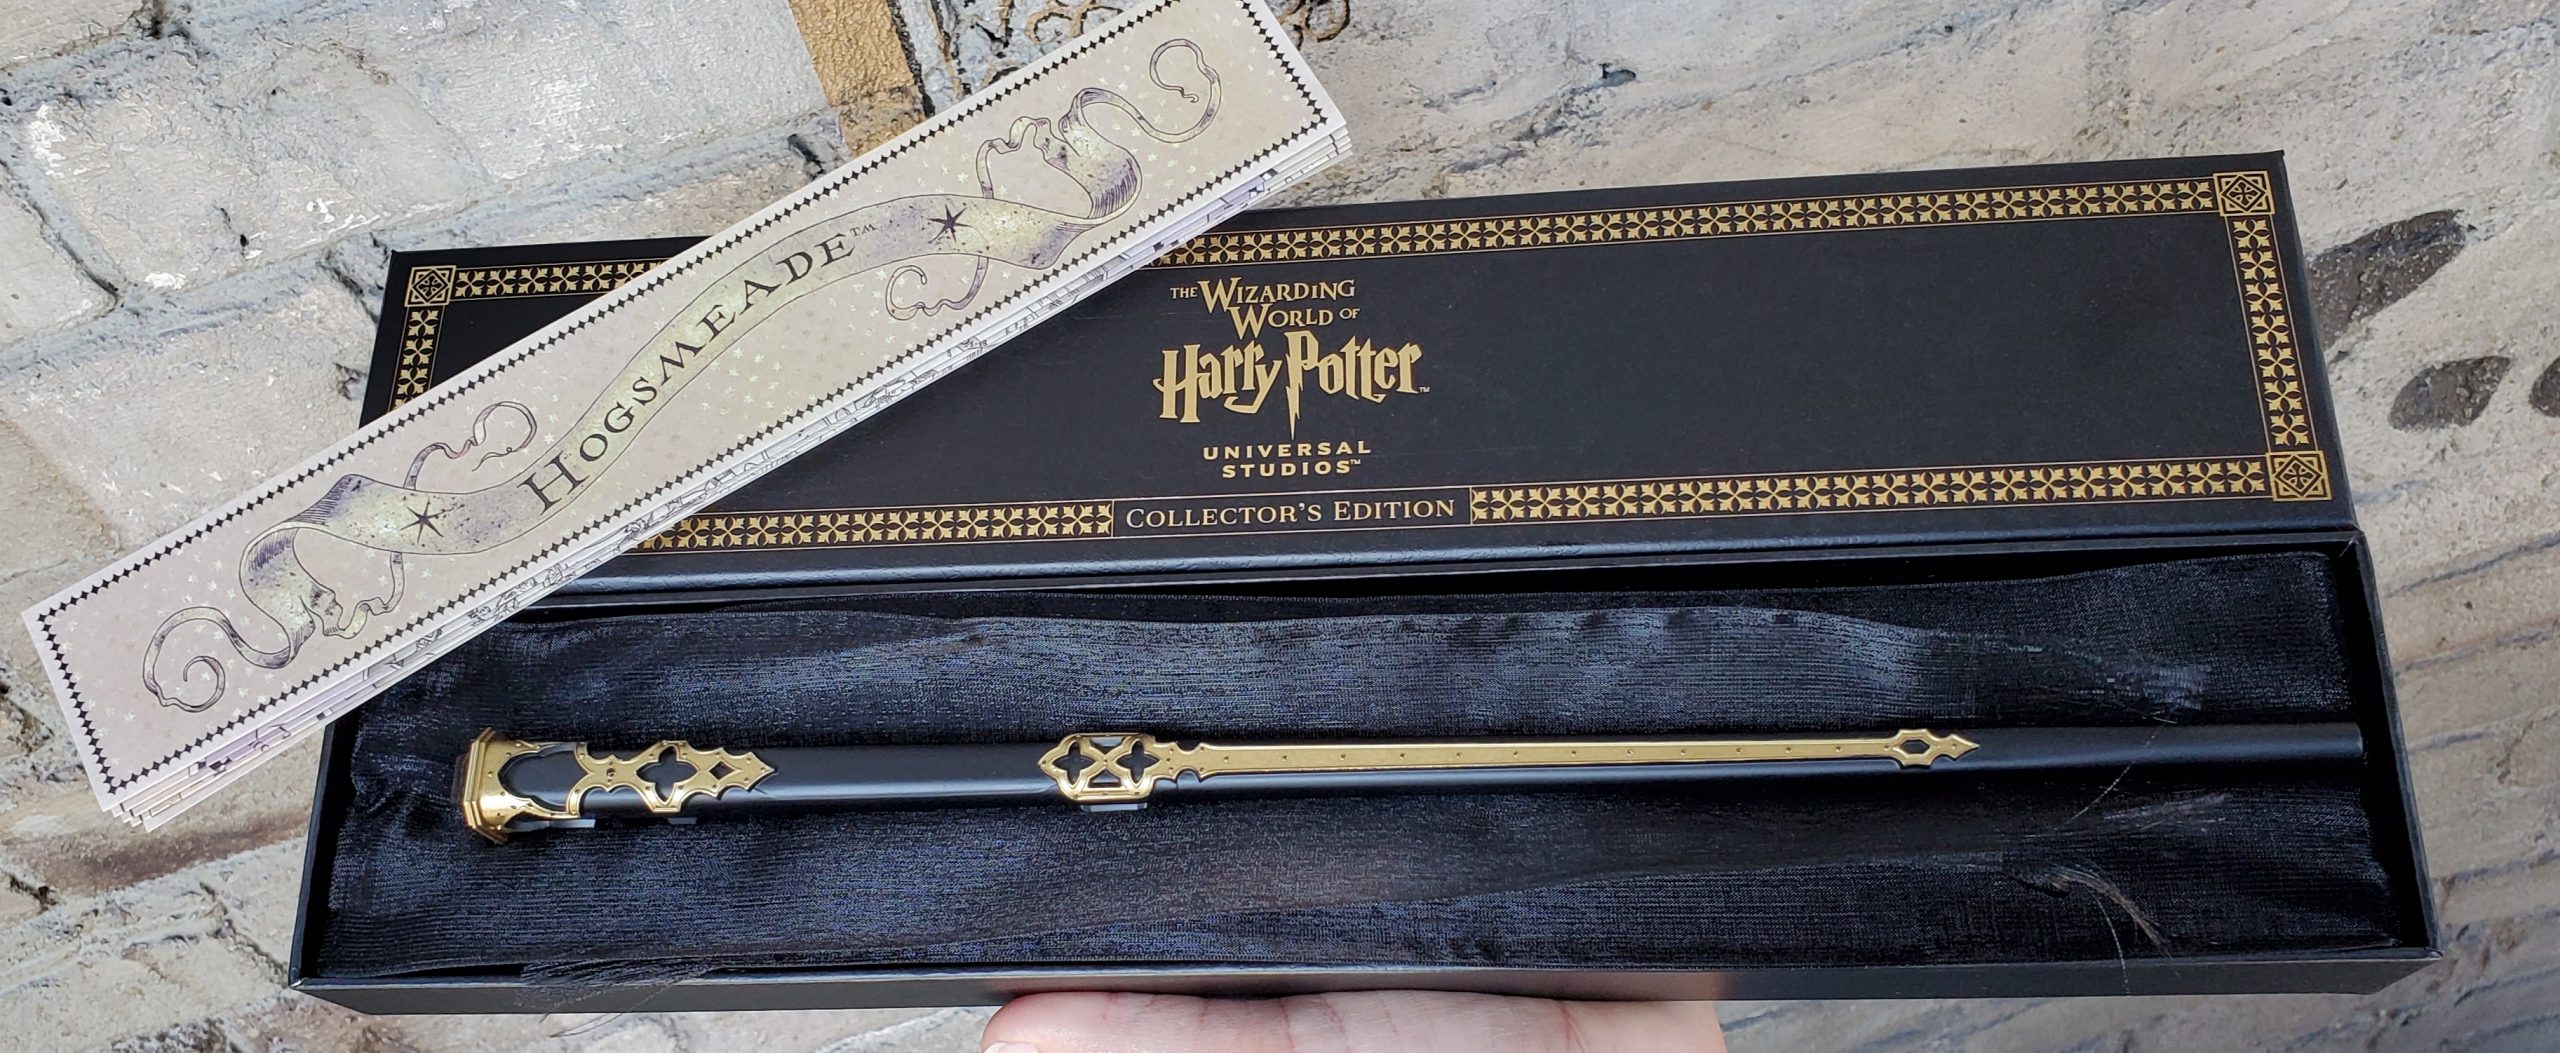 NEW Universal Studios Harry Potter 2019 Collector's Edition Wand NIB 